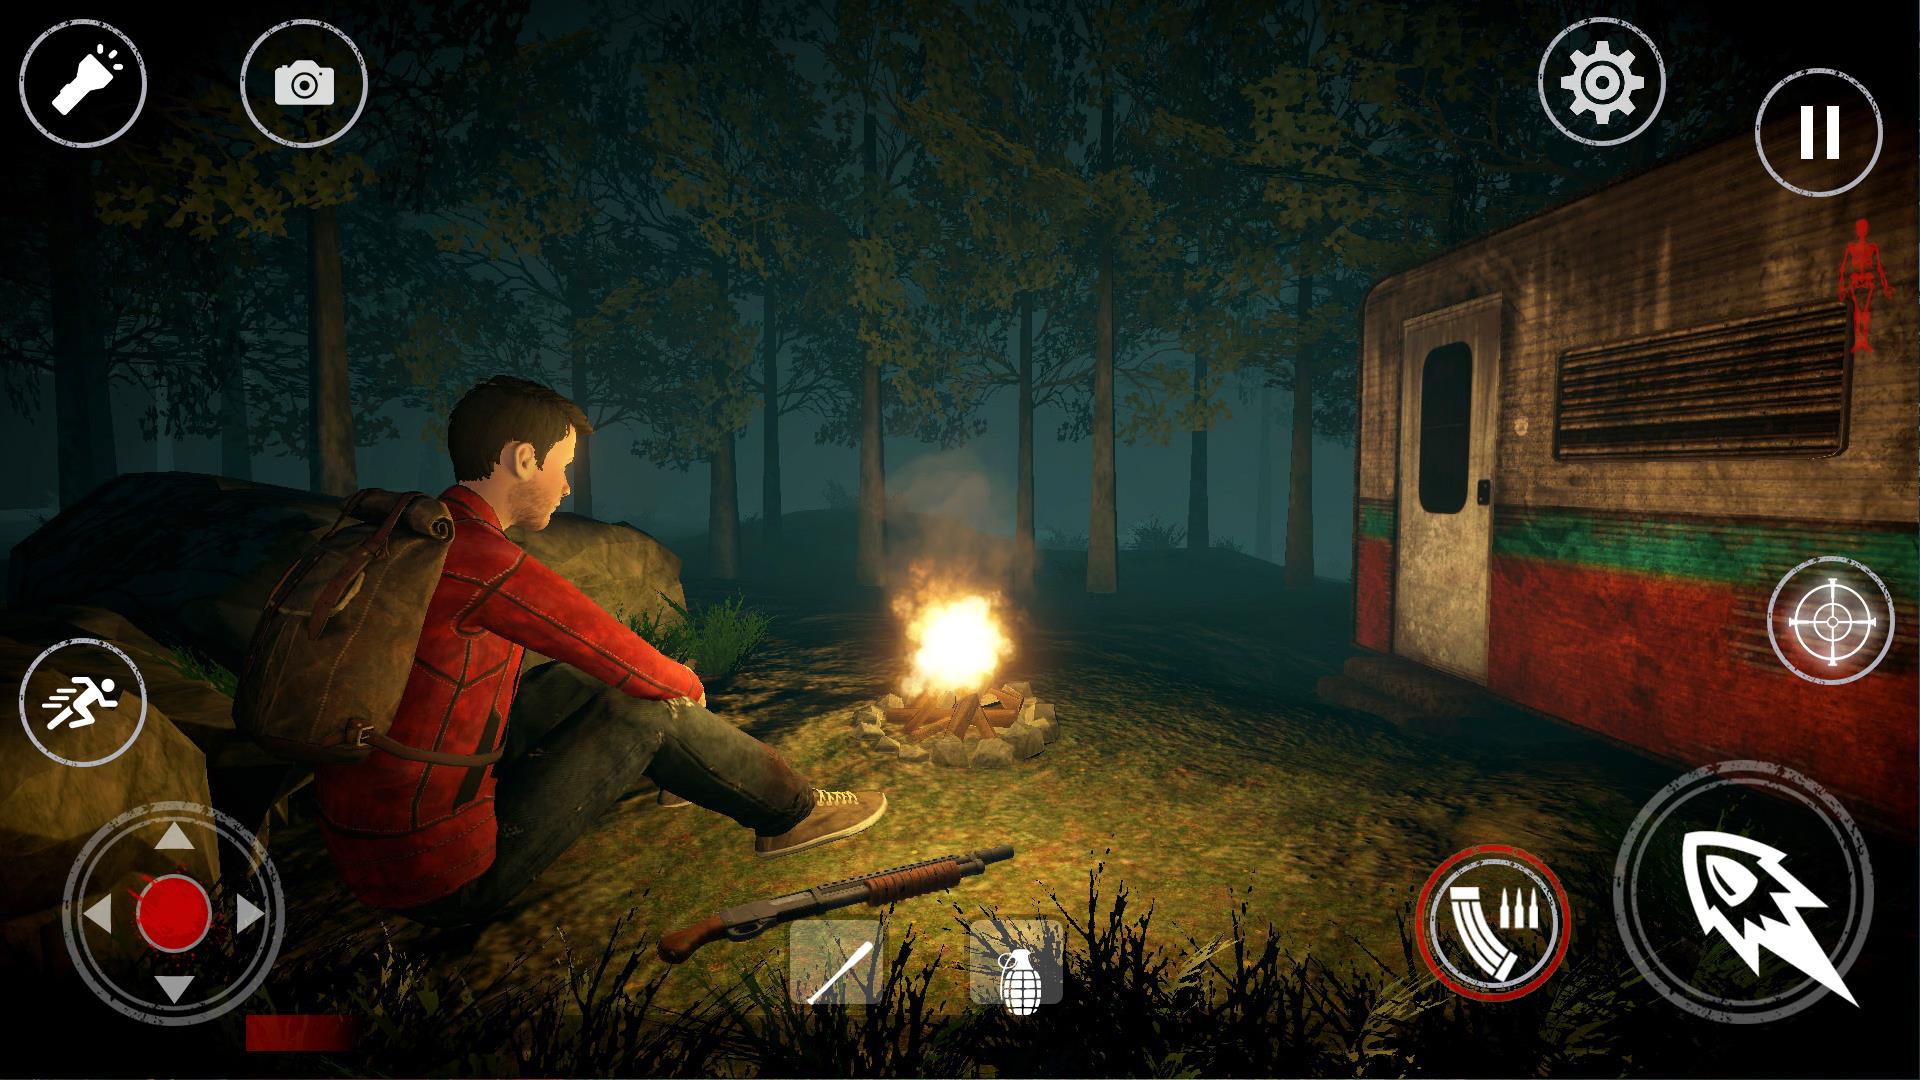 Siren Scary Head - Horror Game Screenshot 11